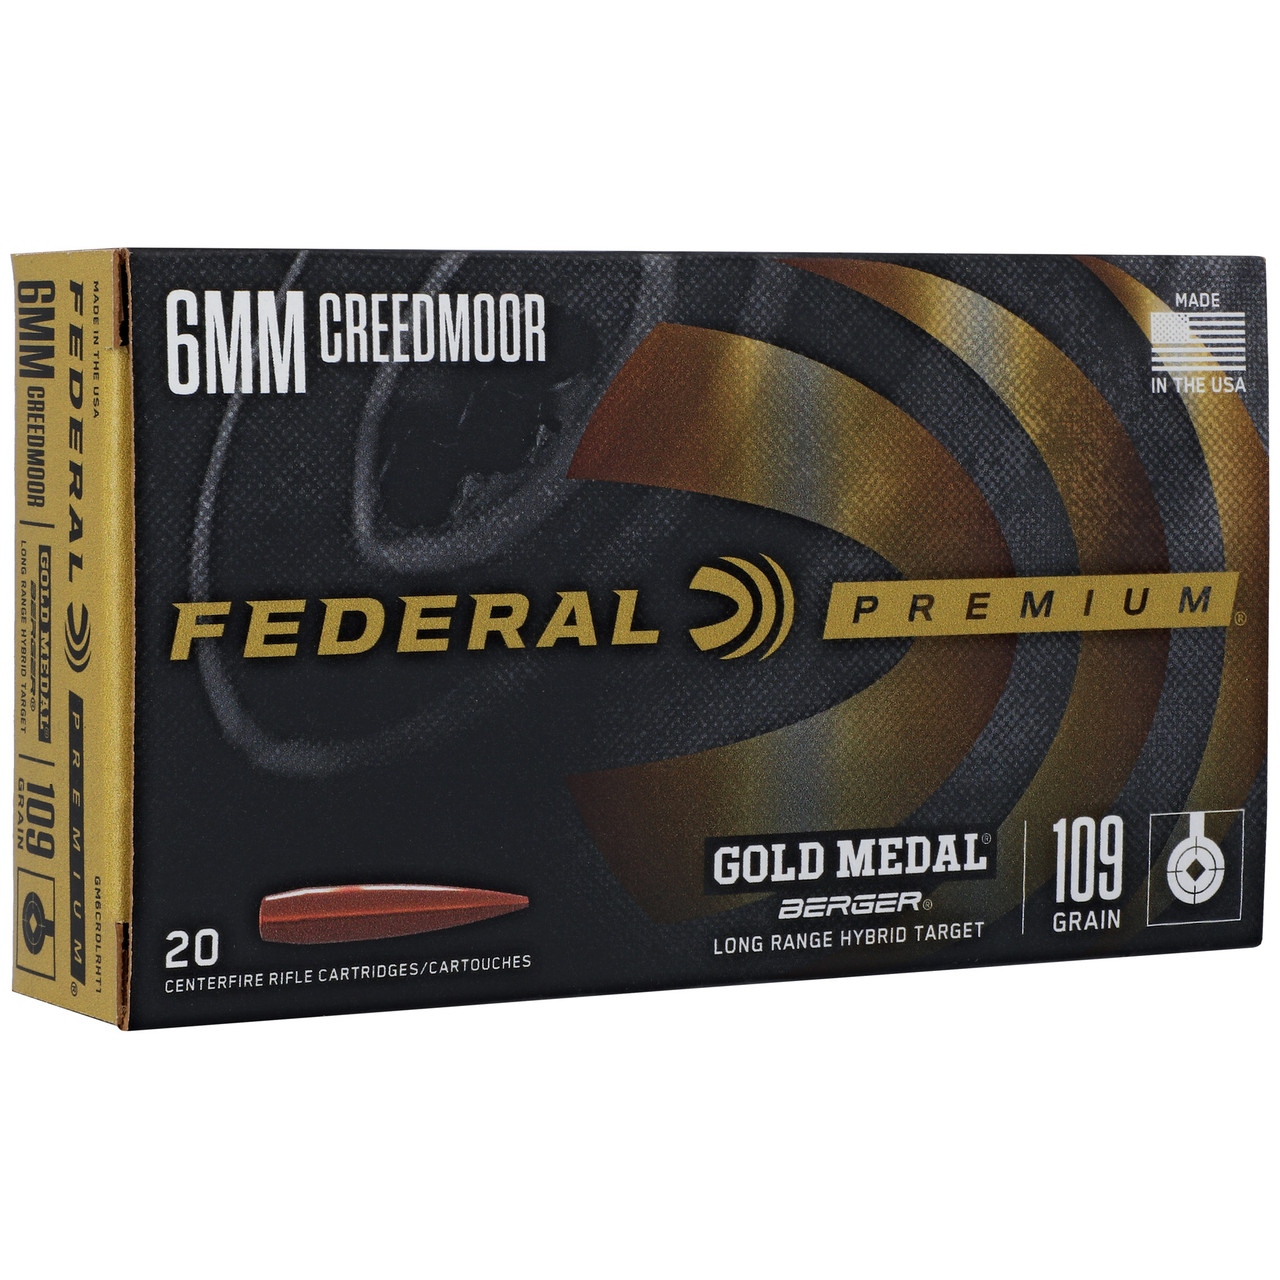 Federal GM6CRDLRHT1 Gld Mdl 6mm 109gr Lrt 20/200